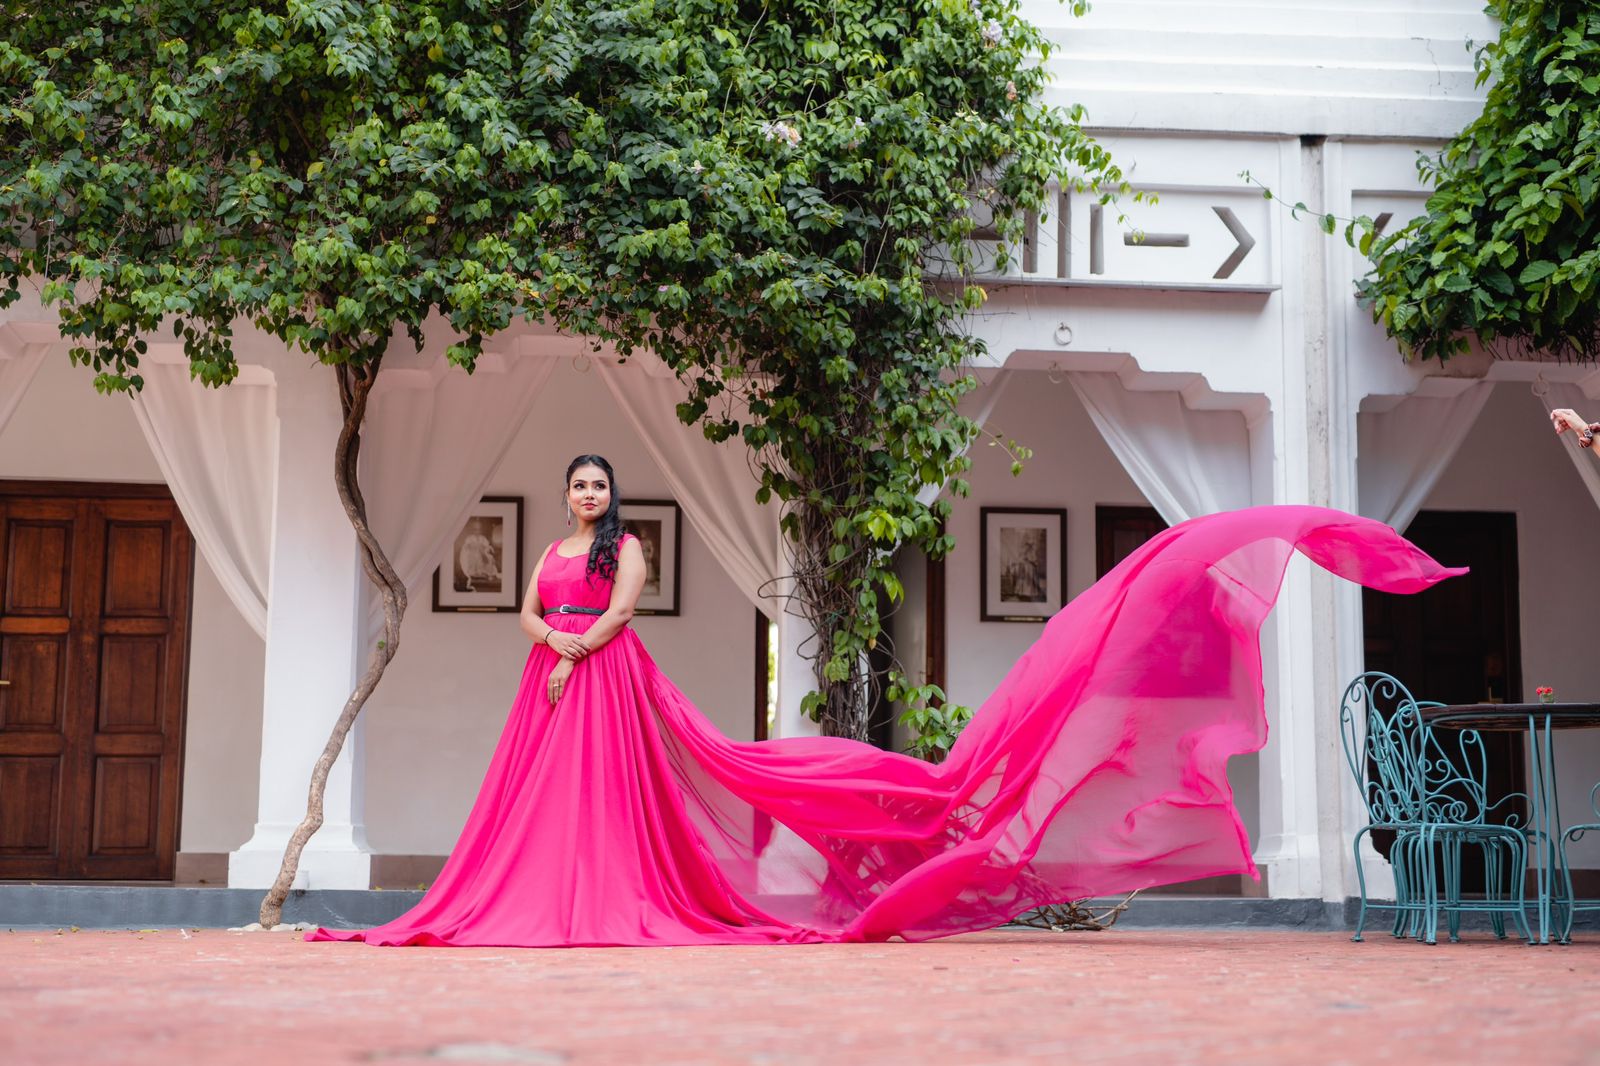 Velvet Dresses for sale in Ludhiana, Punjab, India | Facebook Marketplace |  Facebook